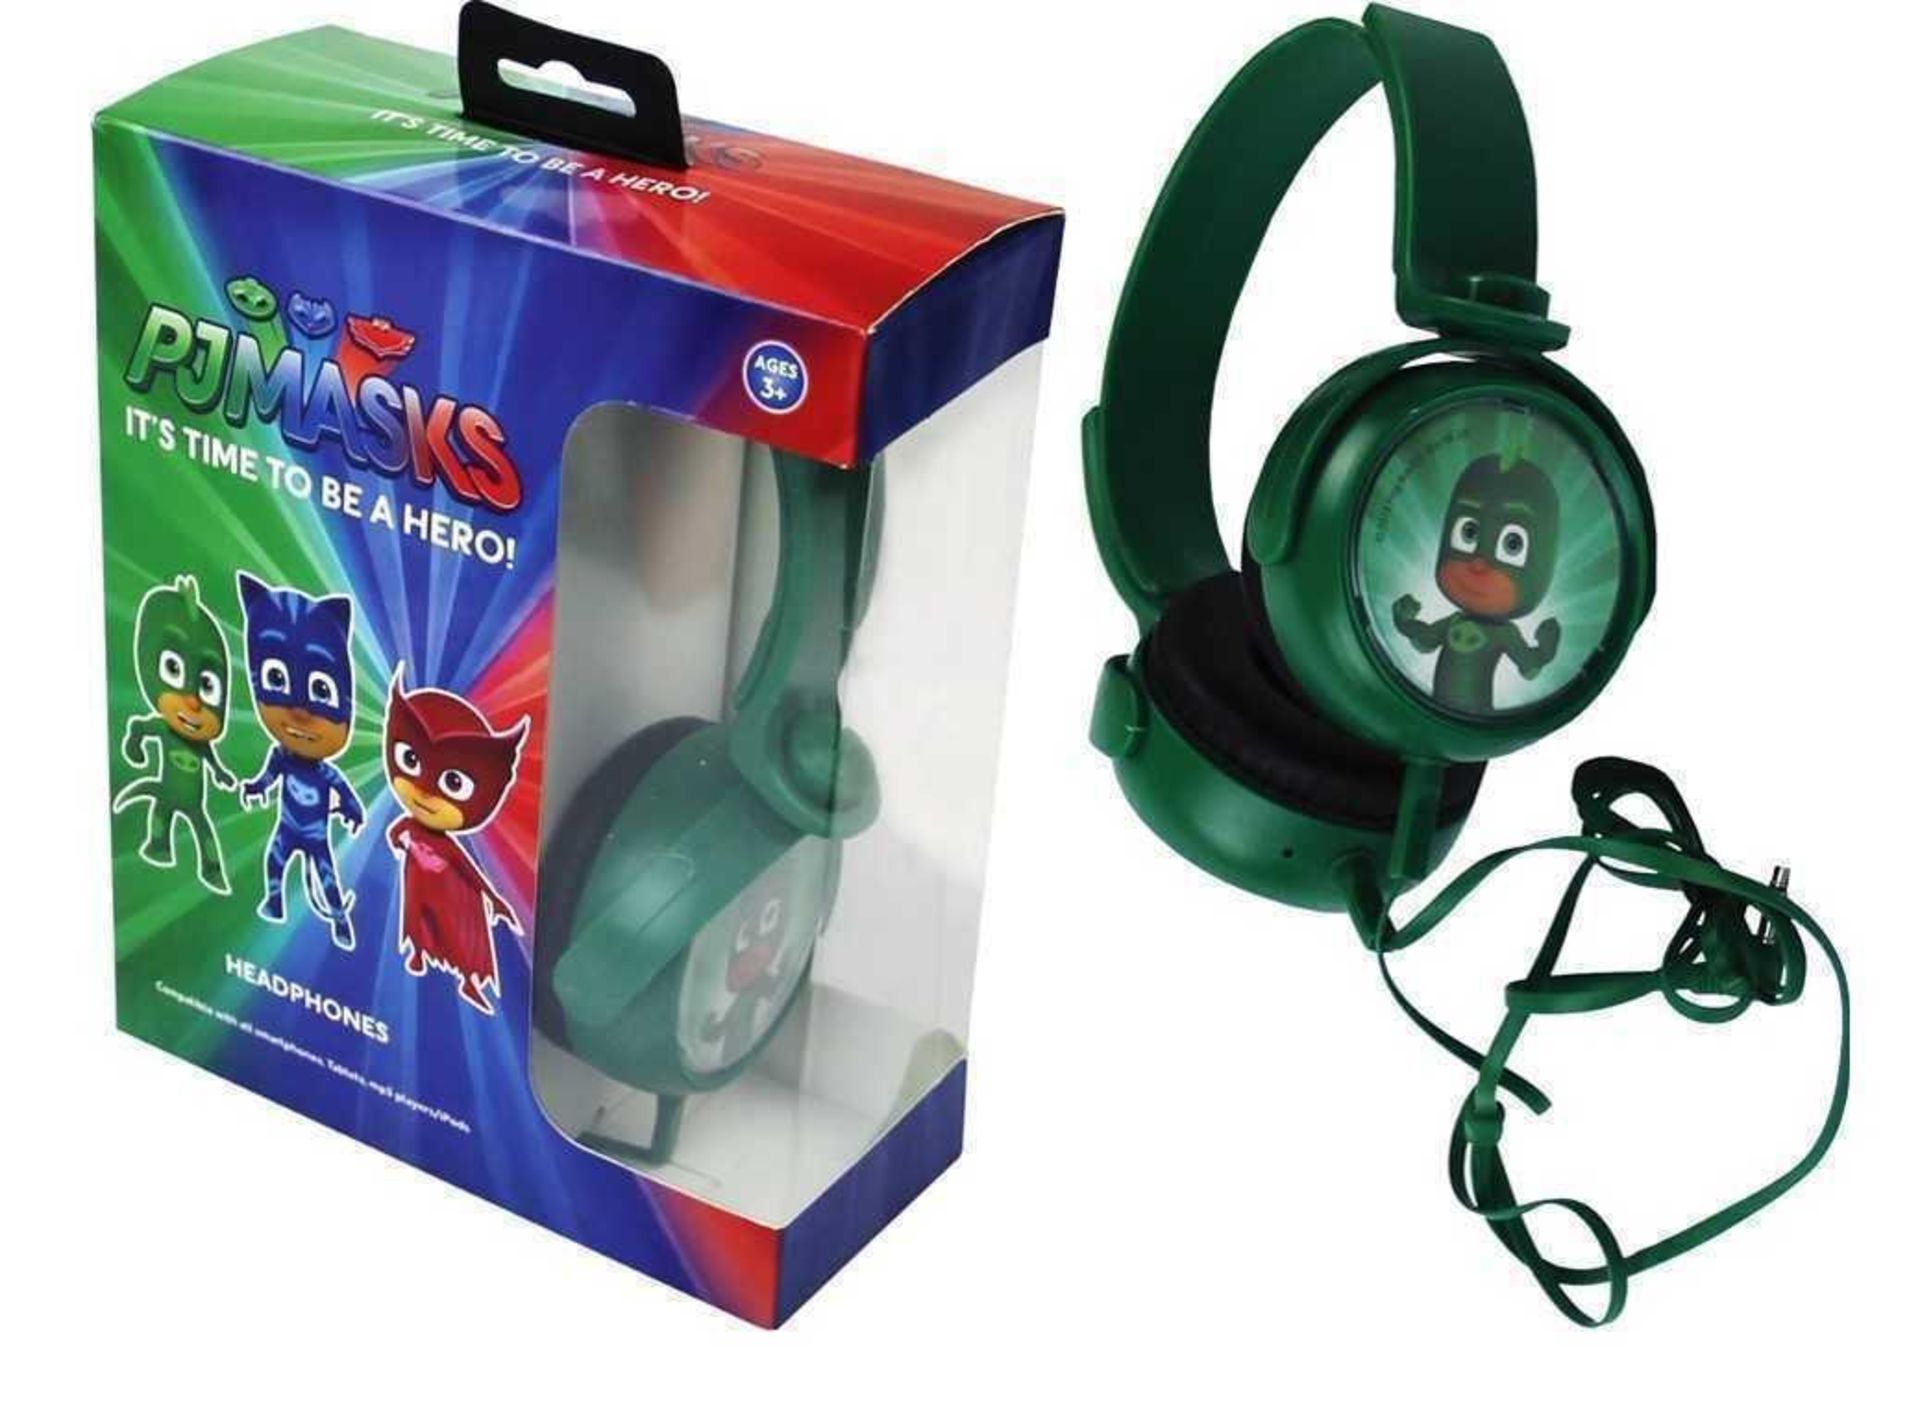 Rrp £200 Brand New Pjmasks Gekko Headphones - Image 2 of 2